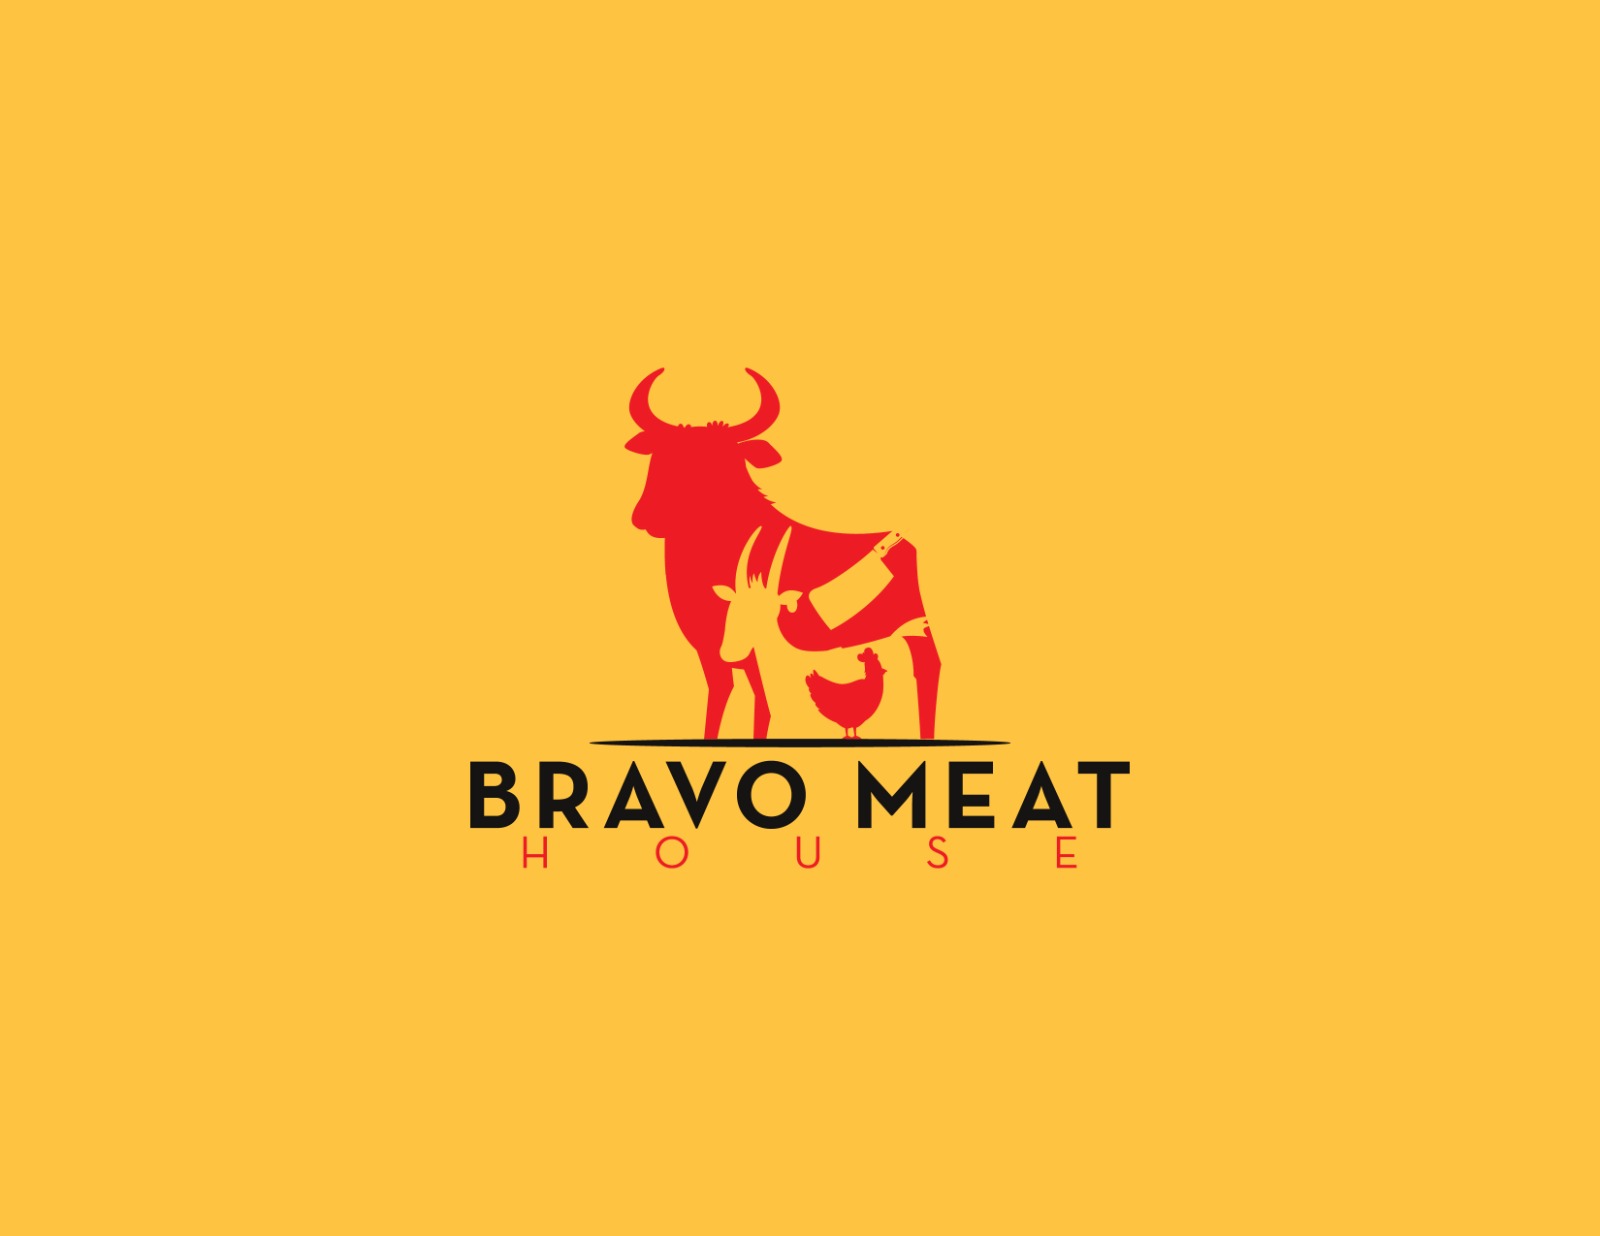 Bravo Meat House